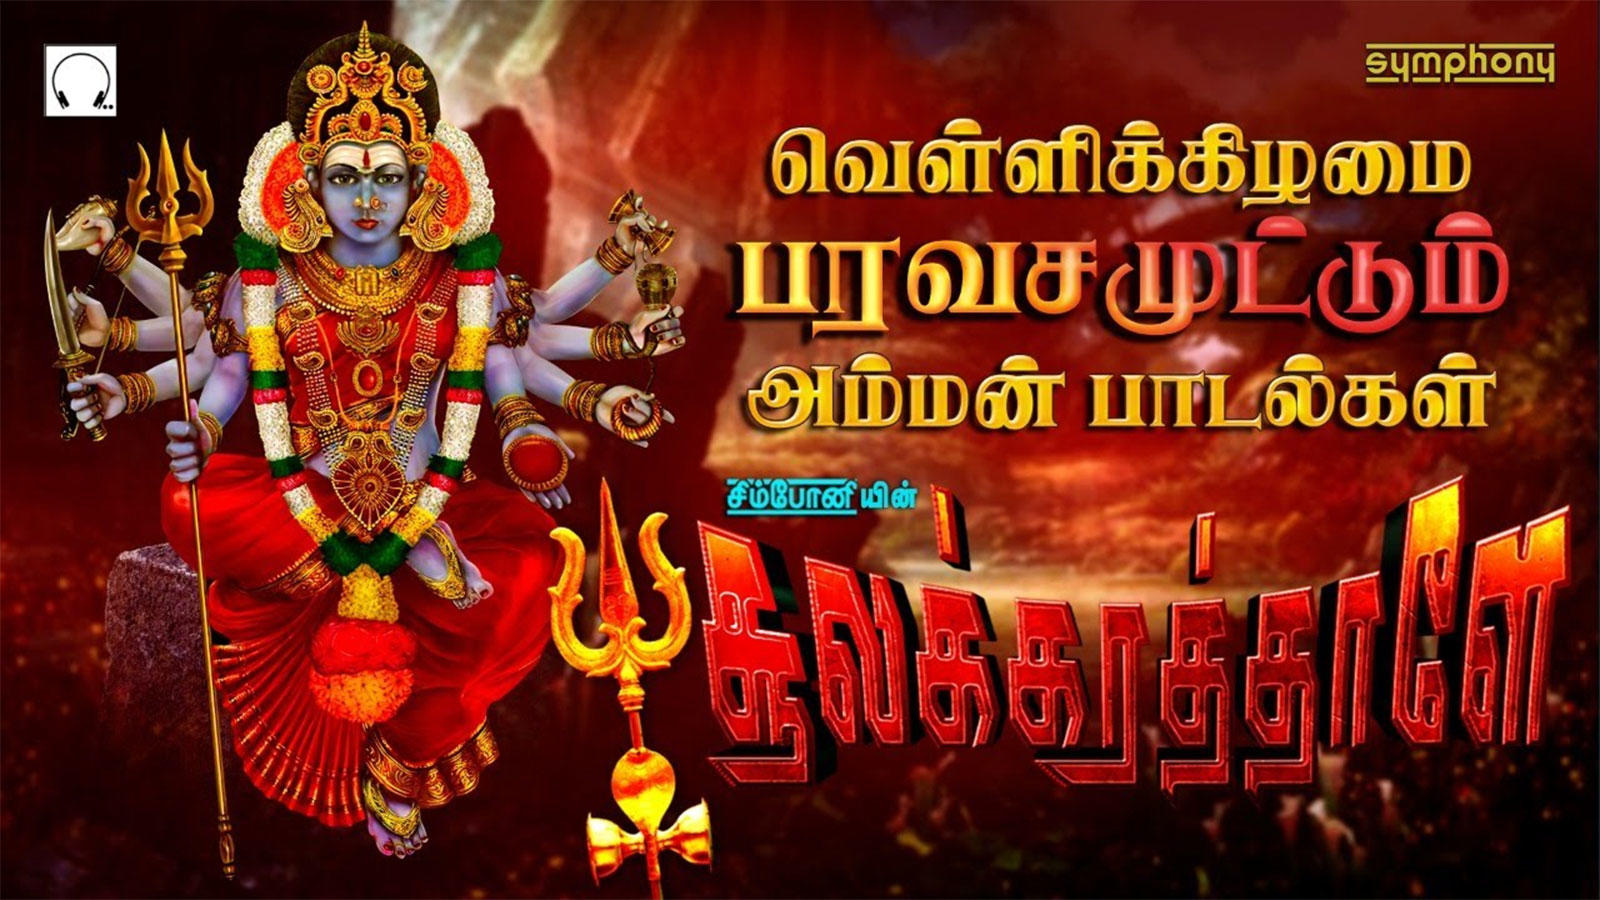 bombay jayashree devotional tamil songs